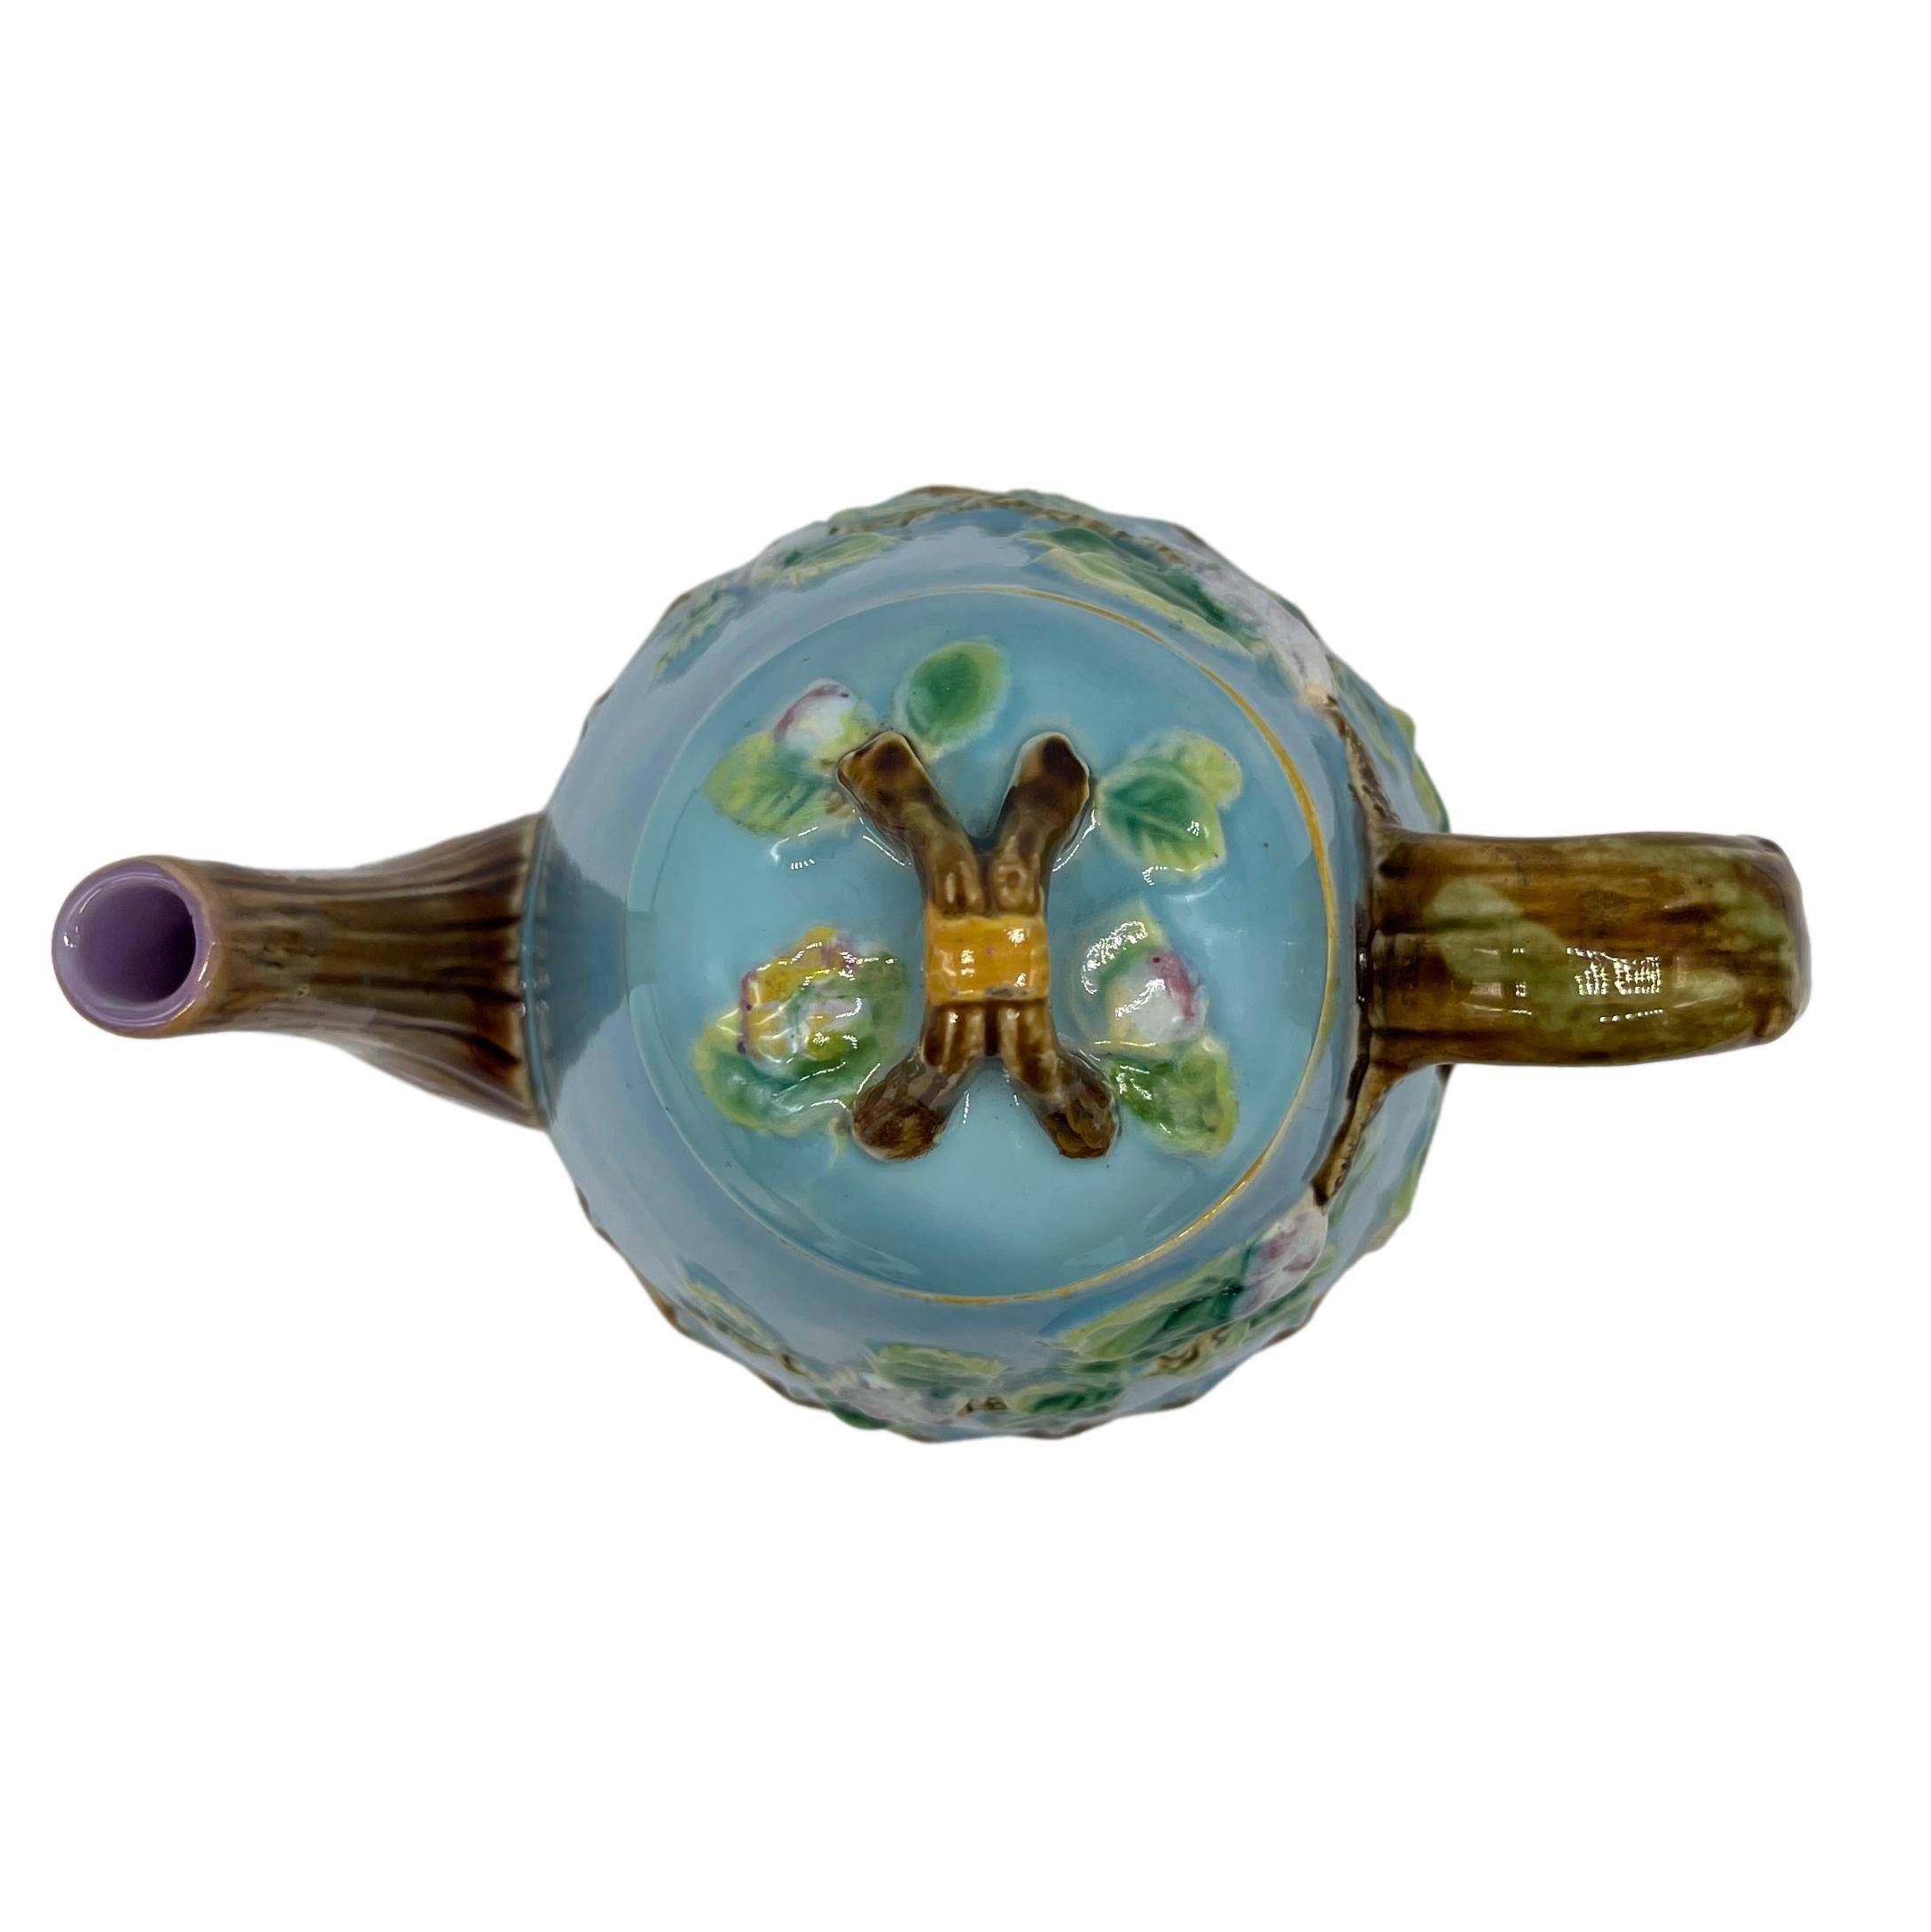 George Jones Majolica 'Apple Blossom' Teapot Basketweave on Turquoise, ca. 1873 For Sale 2